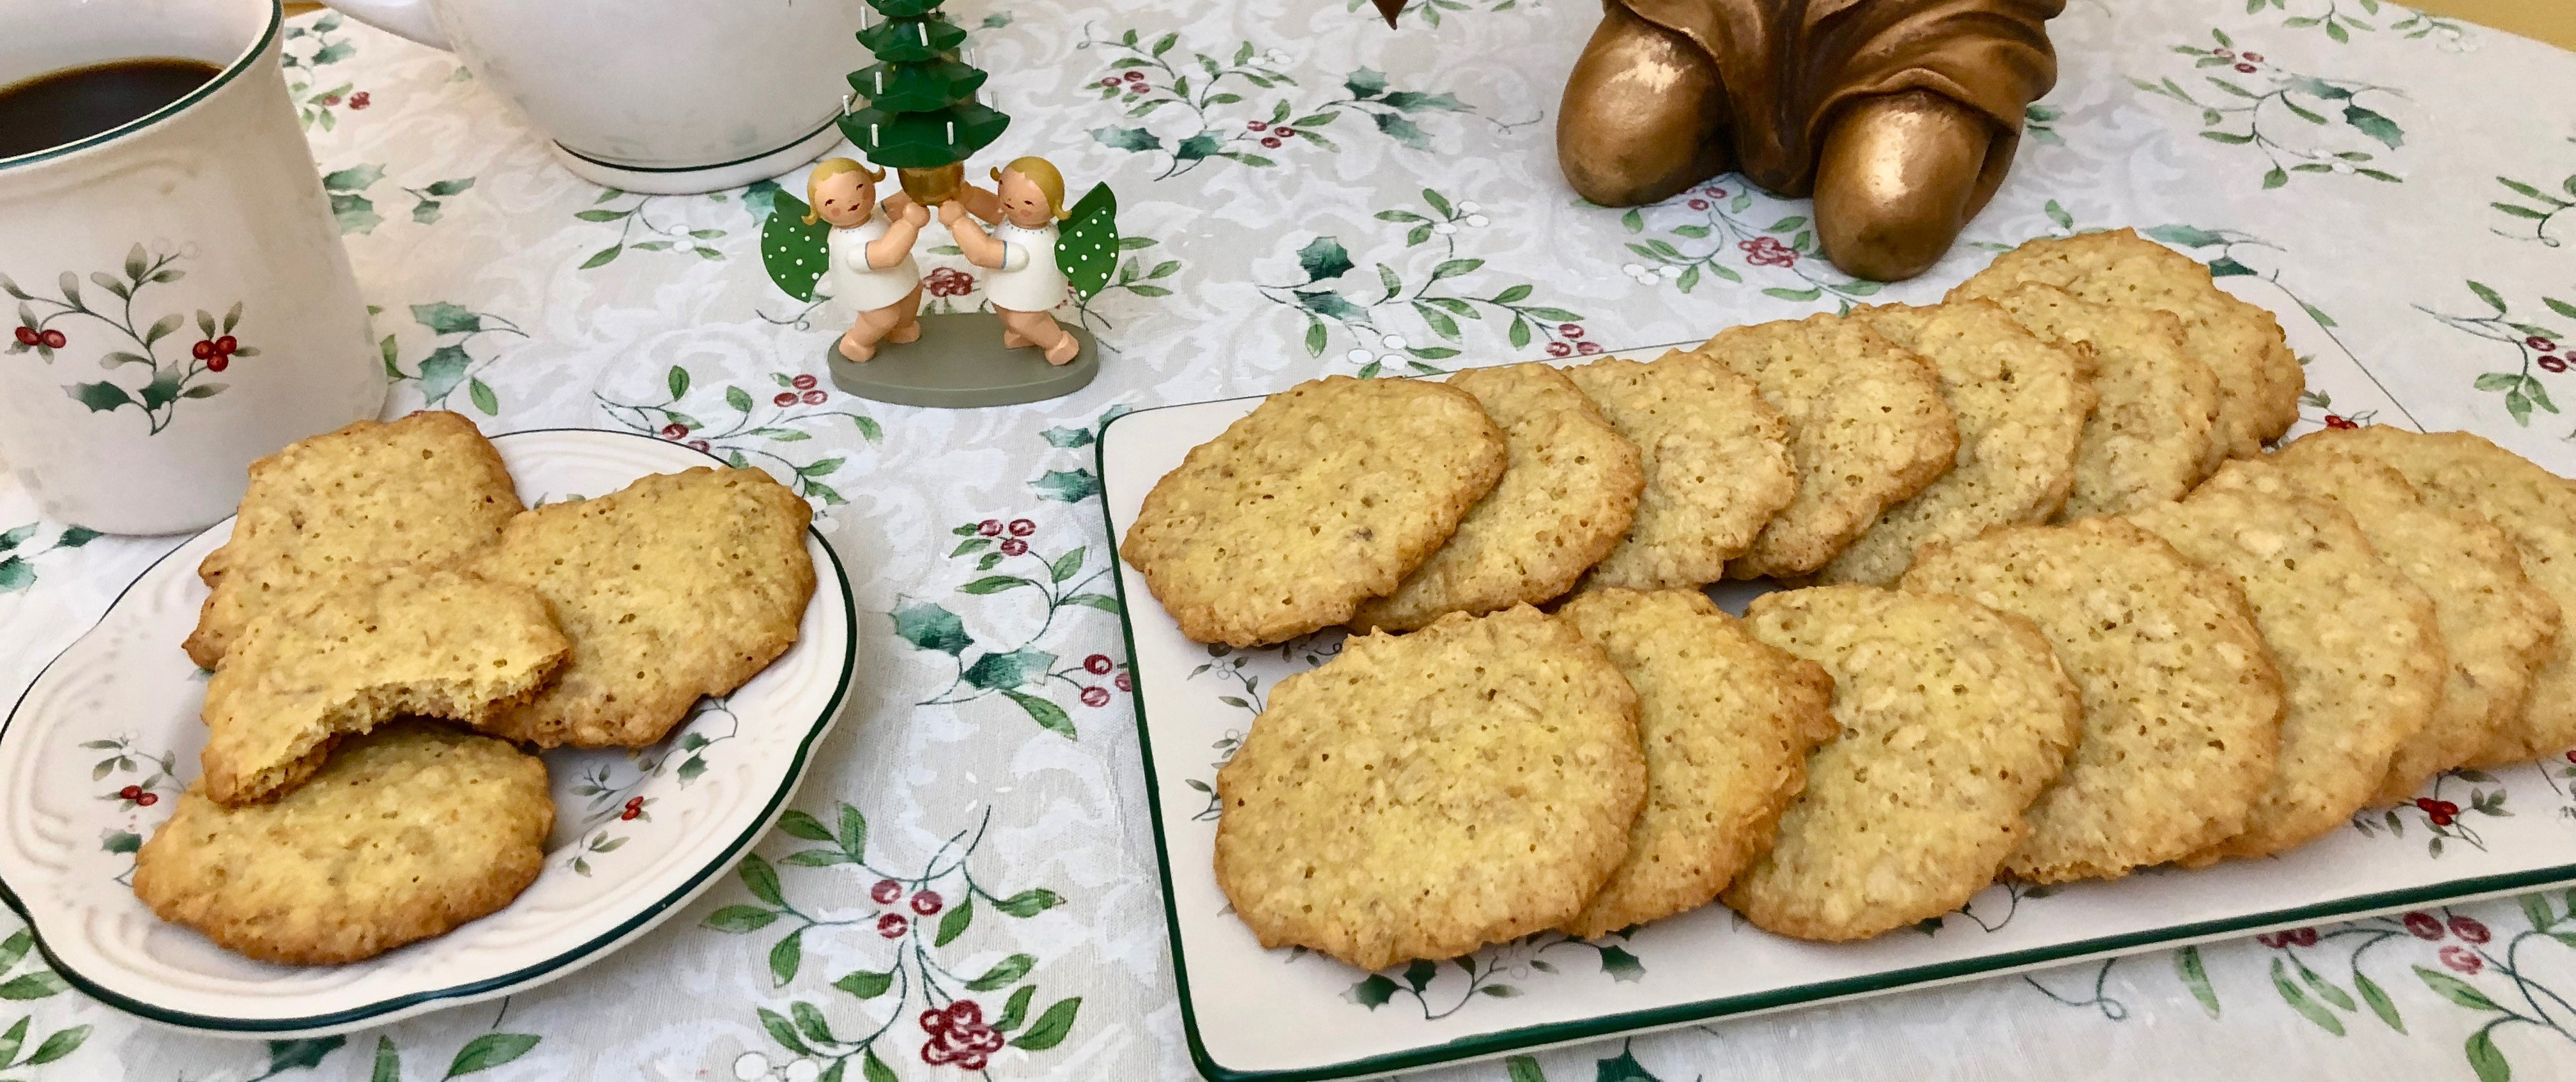 Best 21 Traditional German Christmas Cookies - Most ...